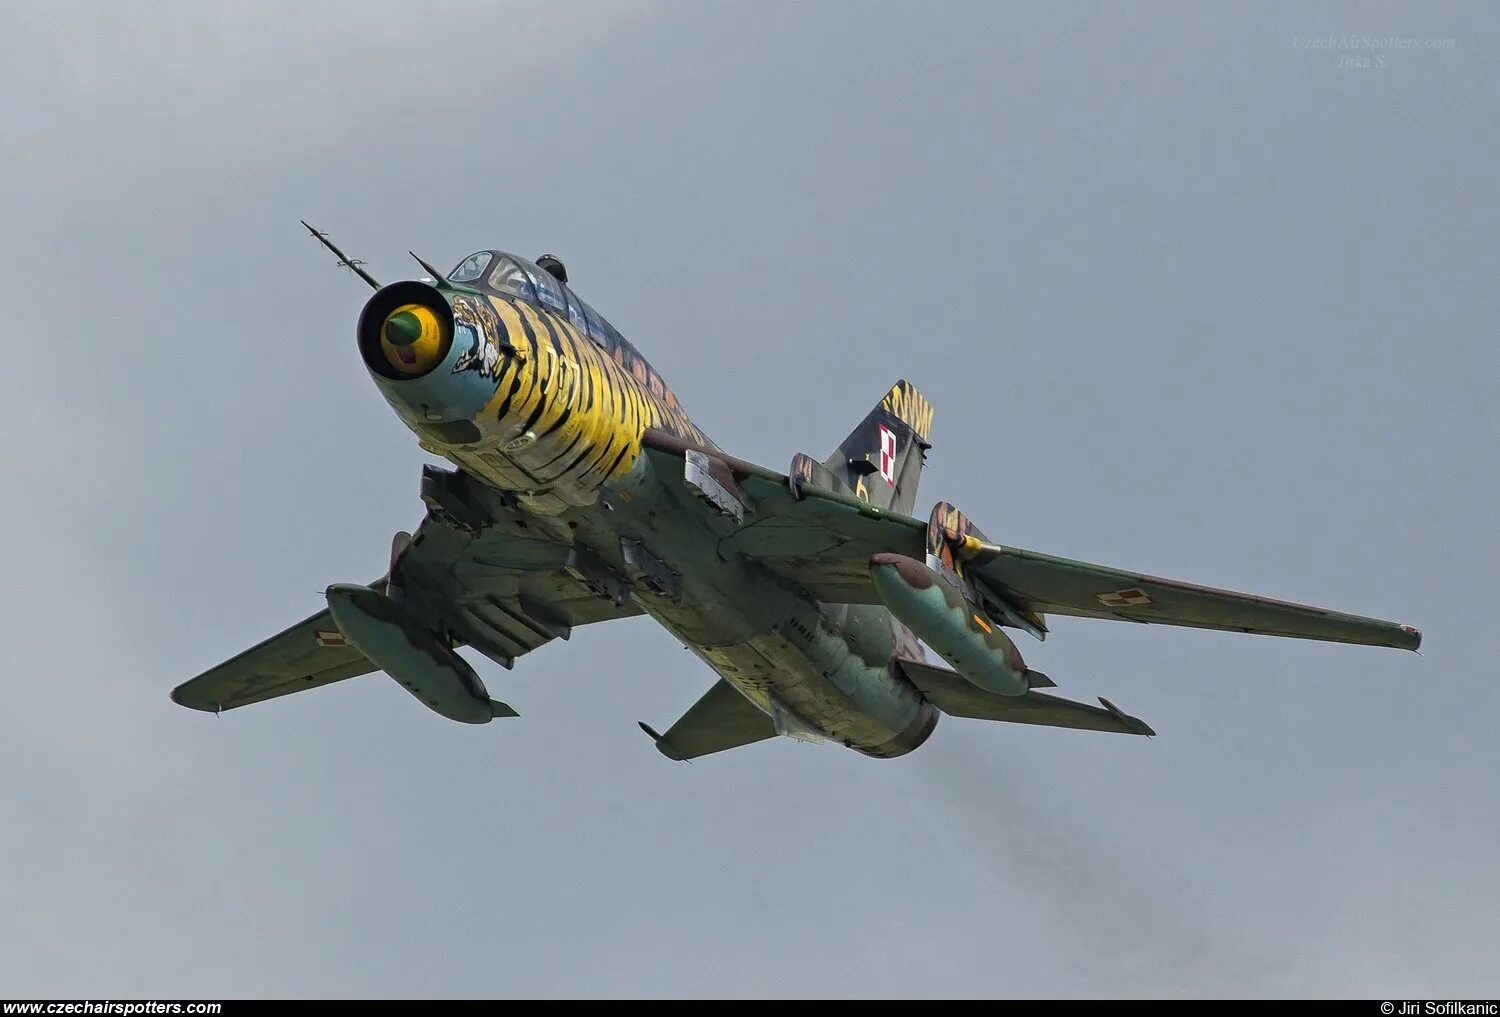 Самолет Су-17м3. Су-17 истребитель. Су 17 воздухозаборник. Су-22 истребитель-бомбардировщик.